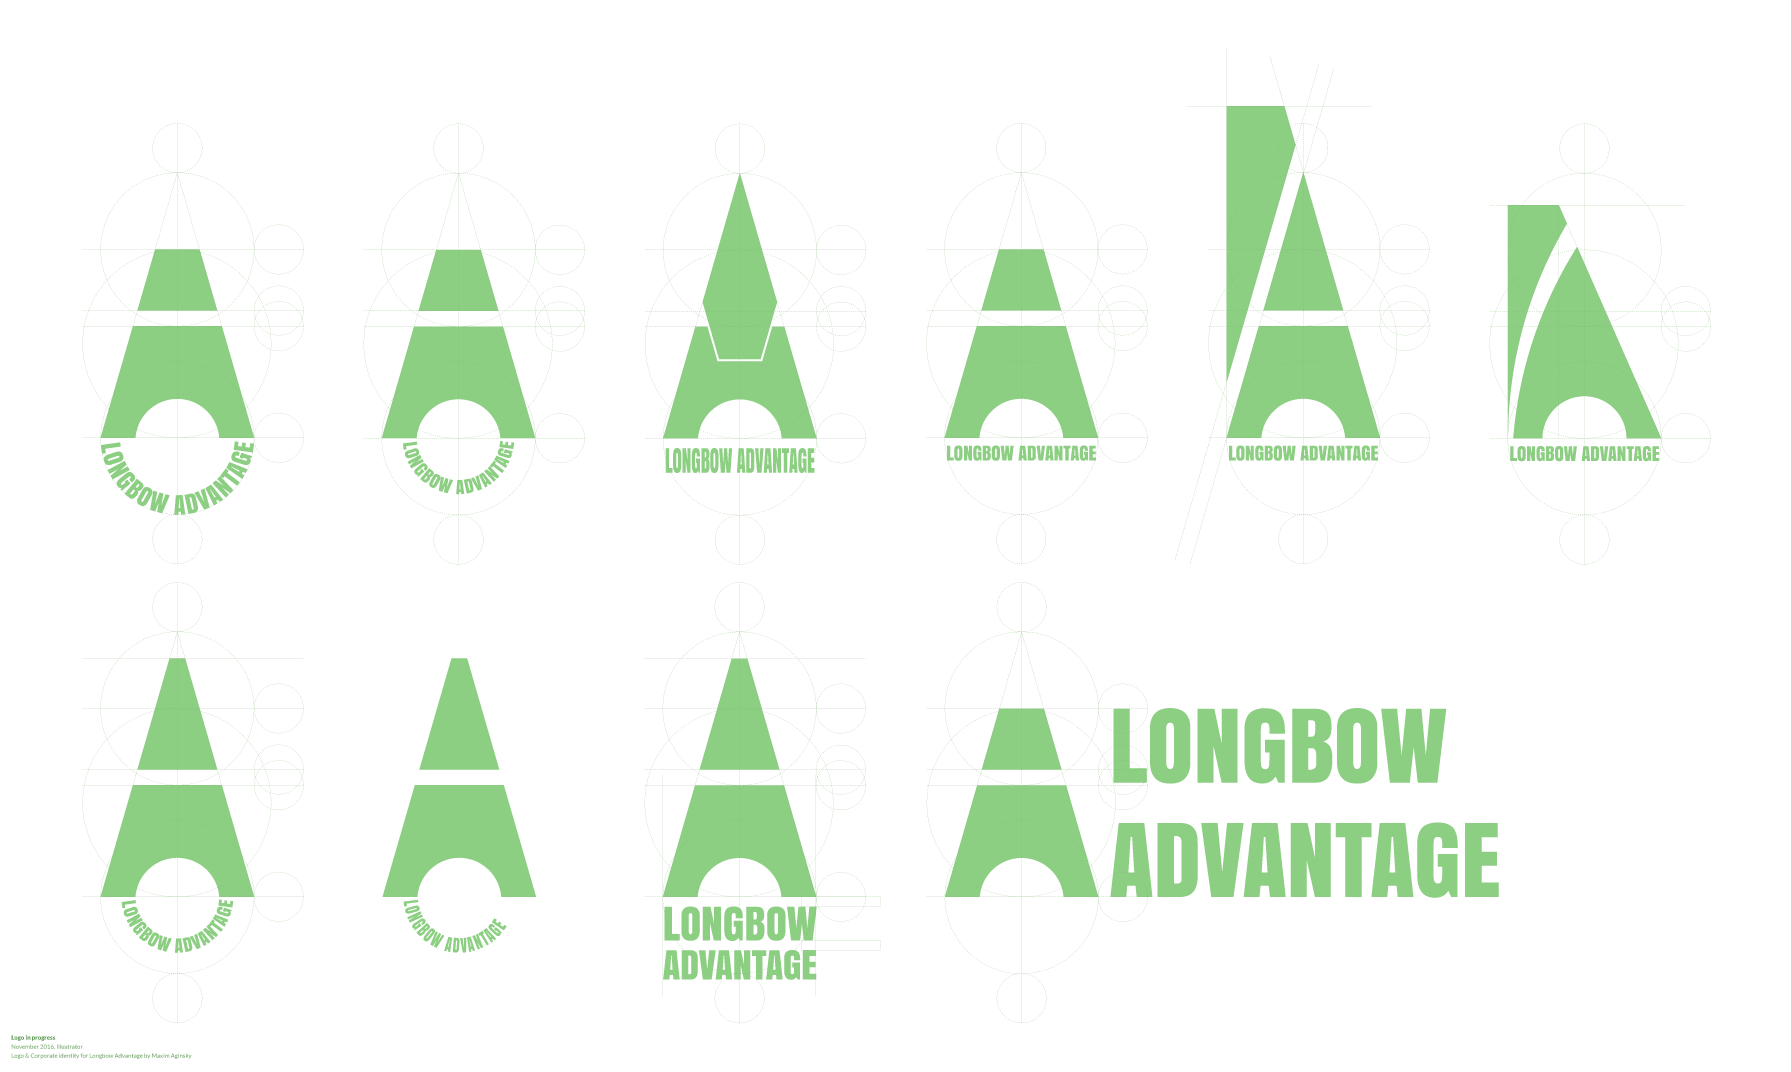 Longbow Advantage logo in progress examples